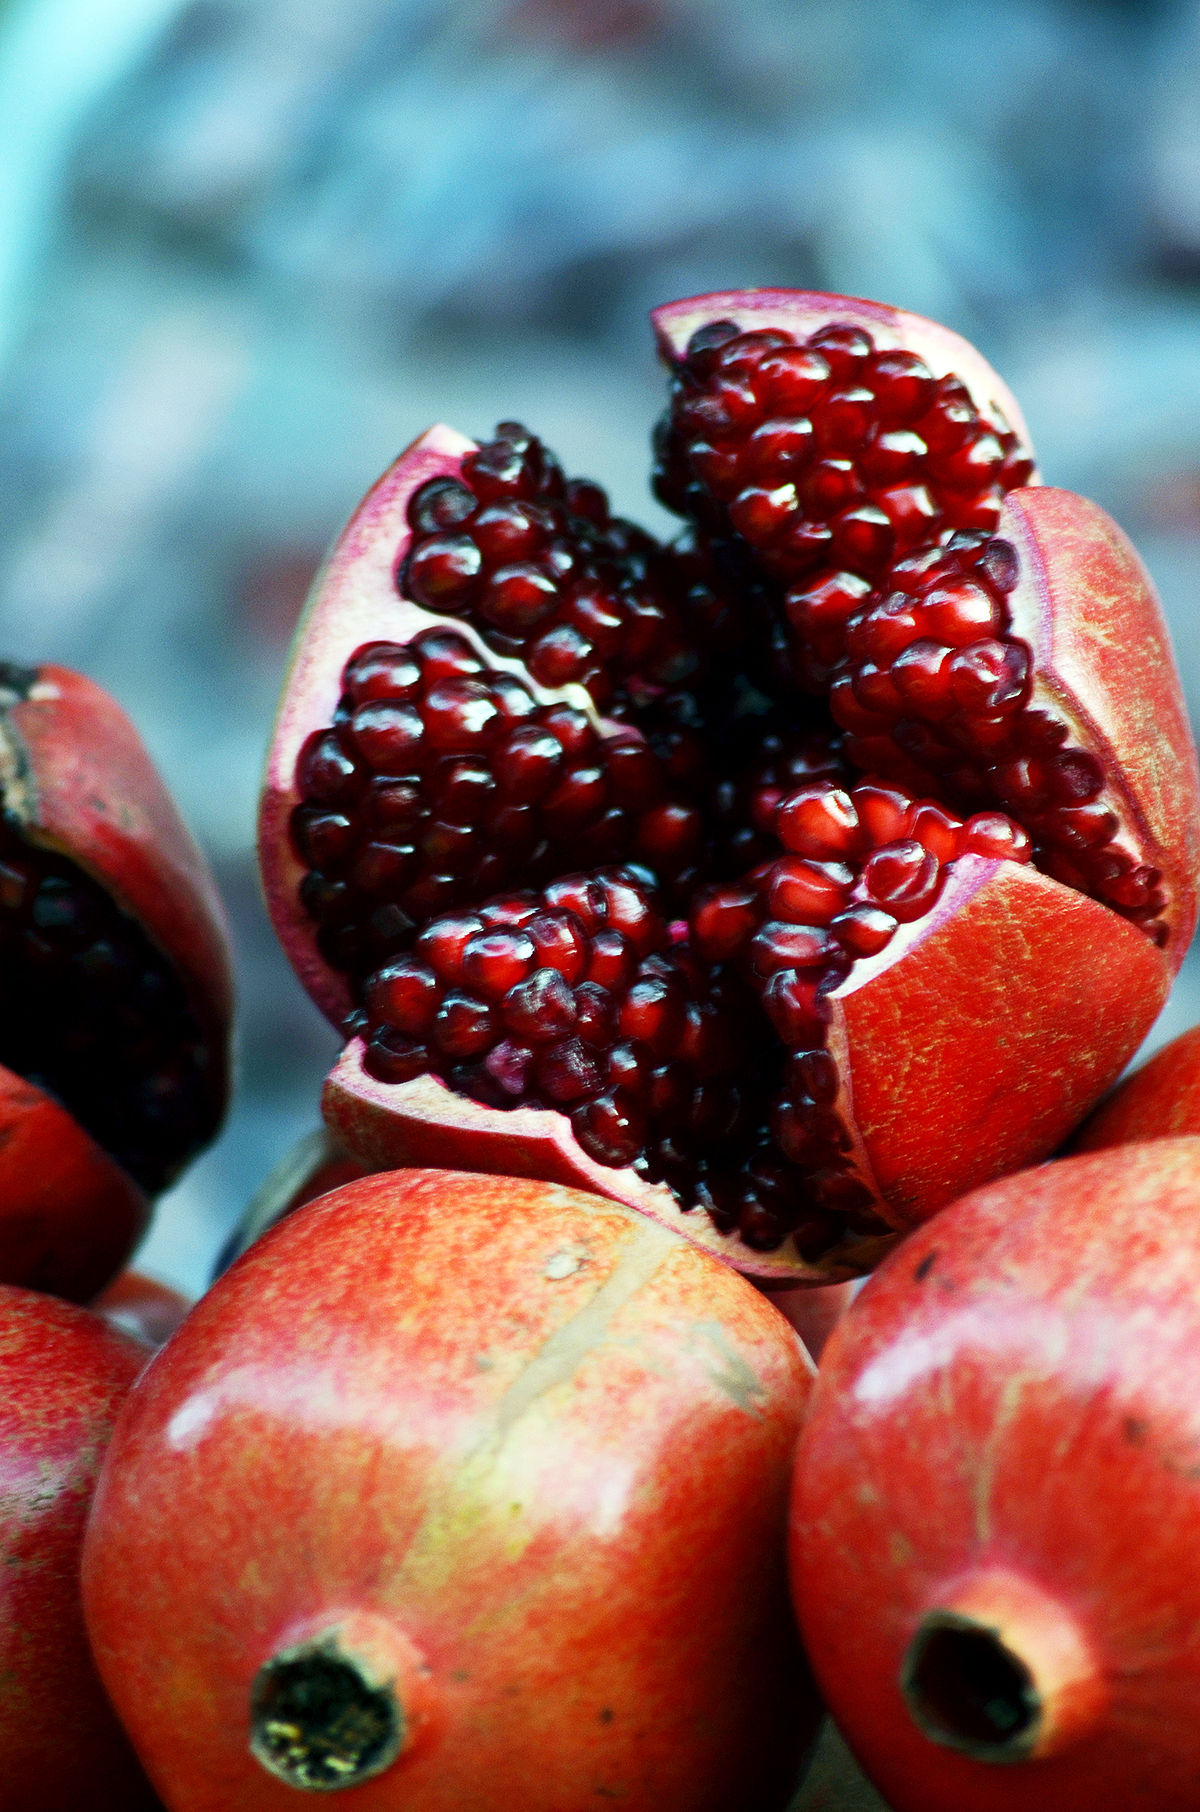 Pomegranate - Wikipedia